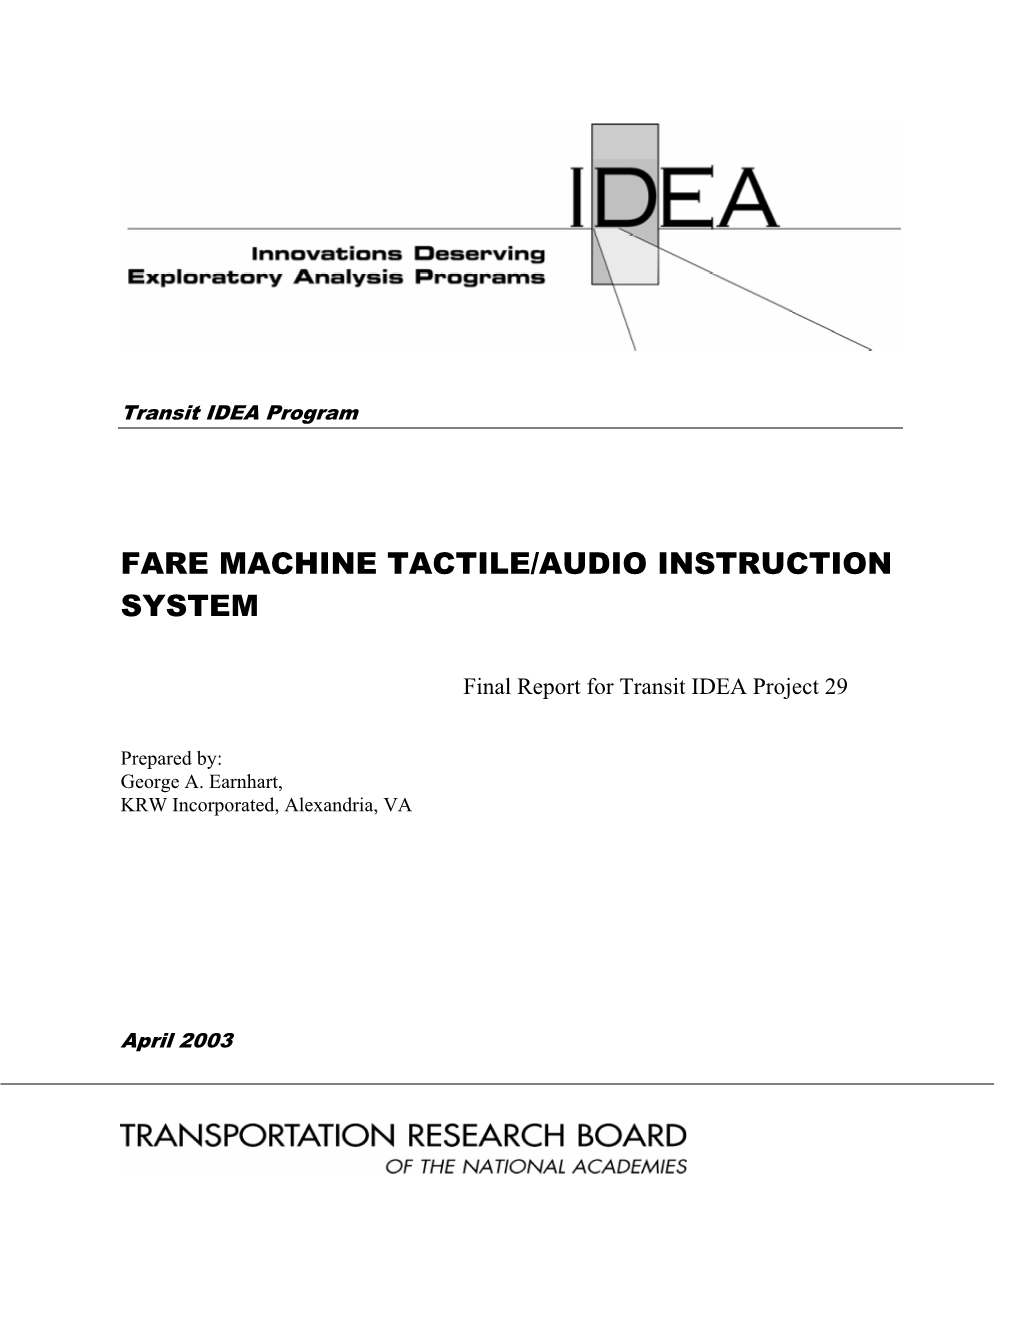 Fare Machine Tactile/Audio Instruction System